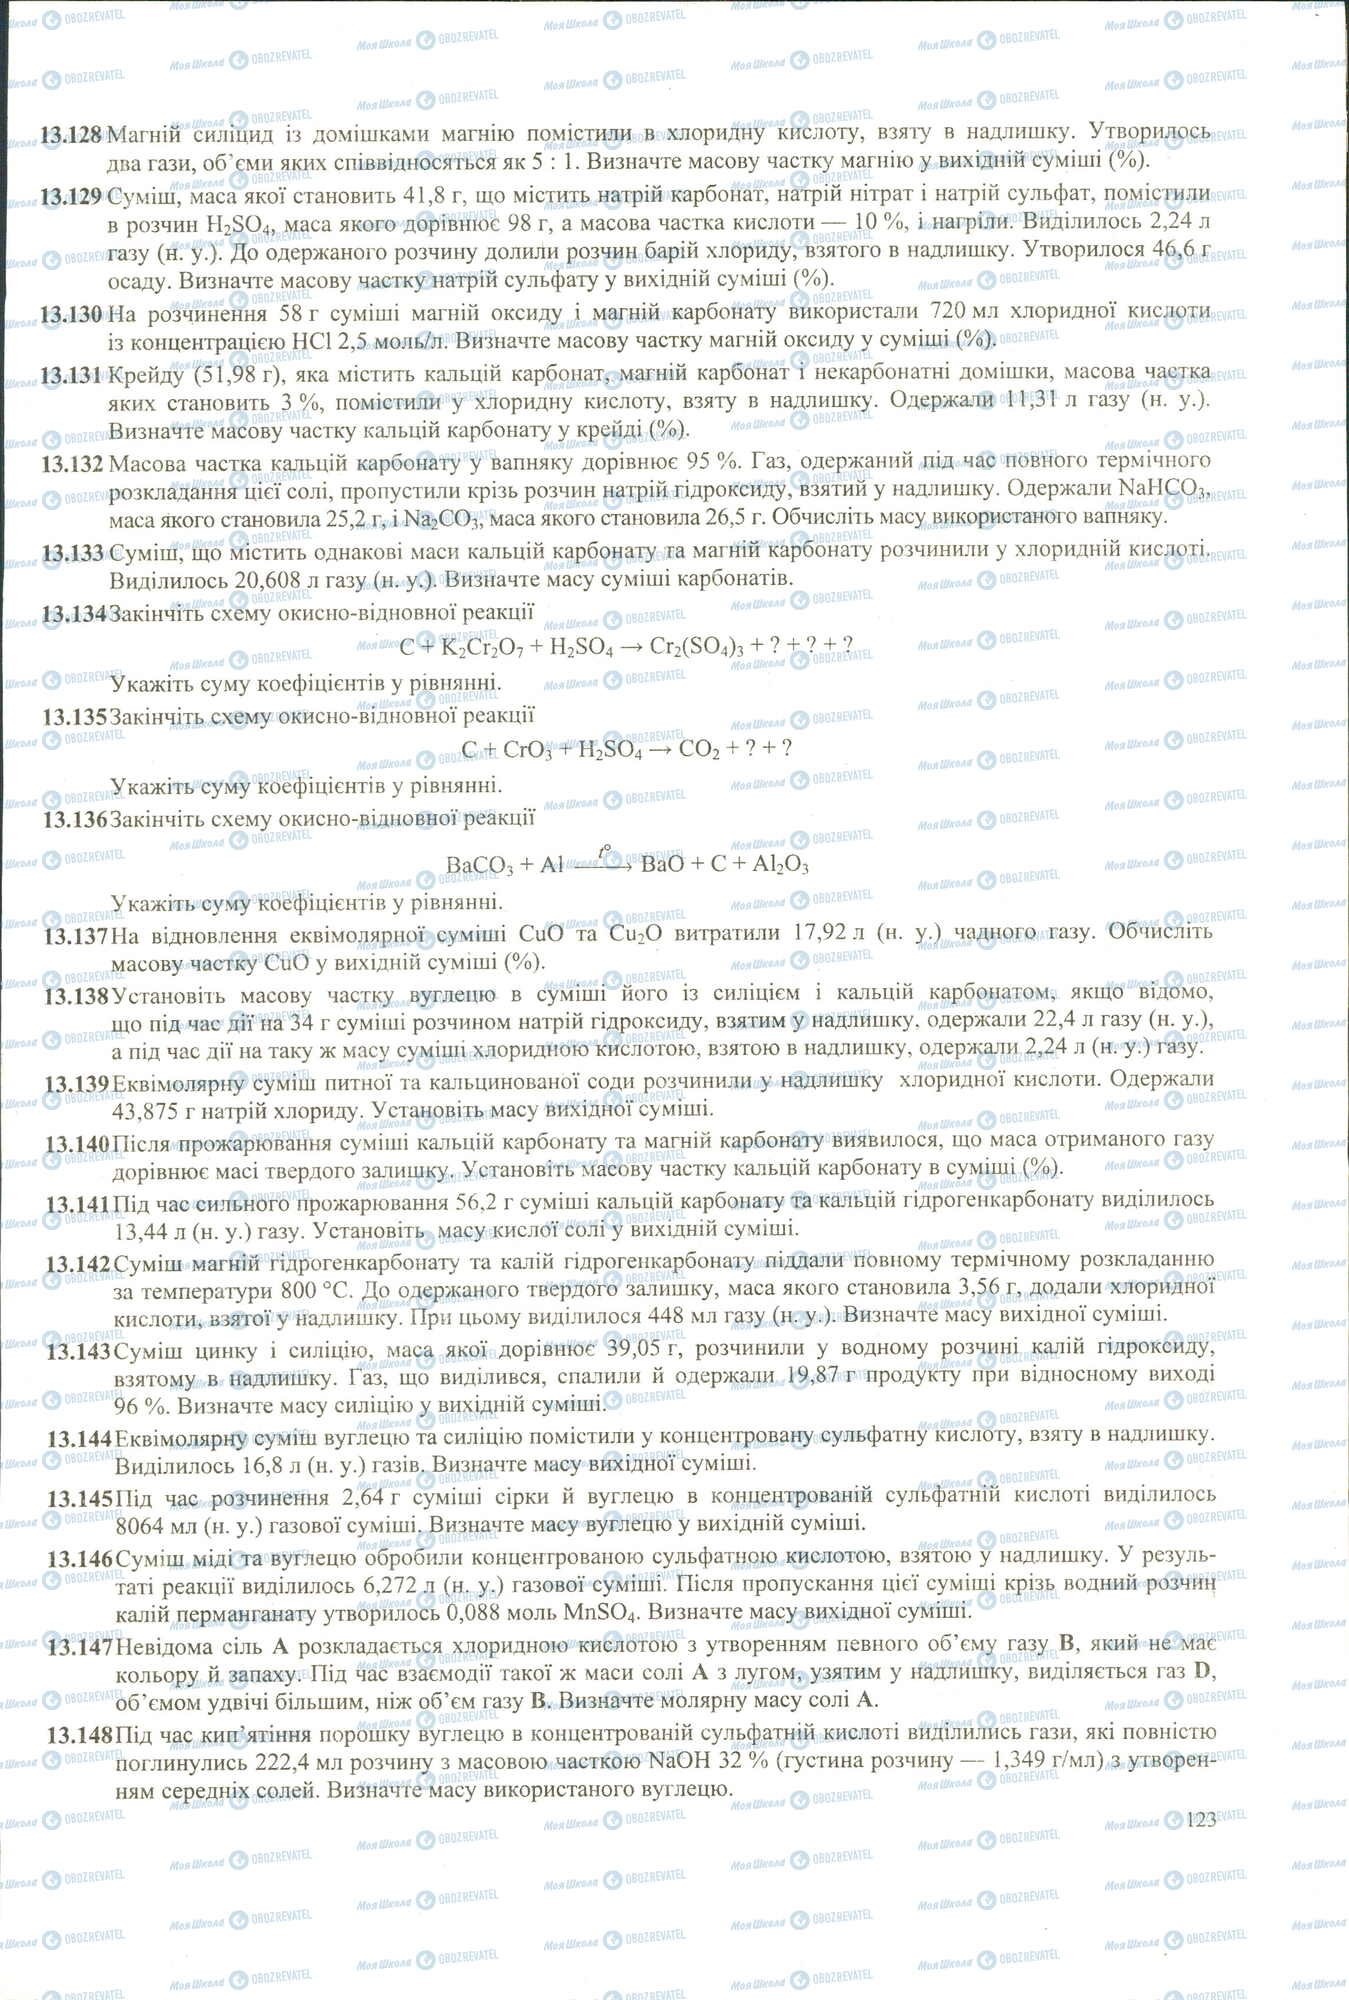 ЗНО Химия 11 класс страница 128-148